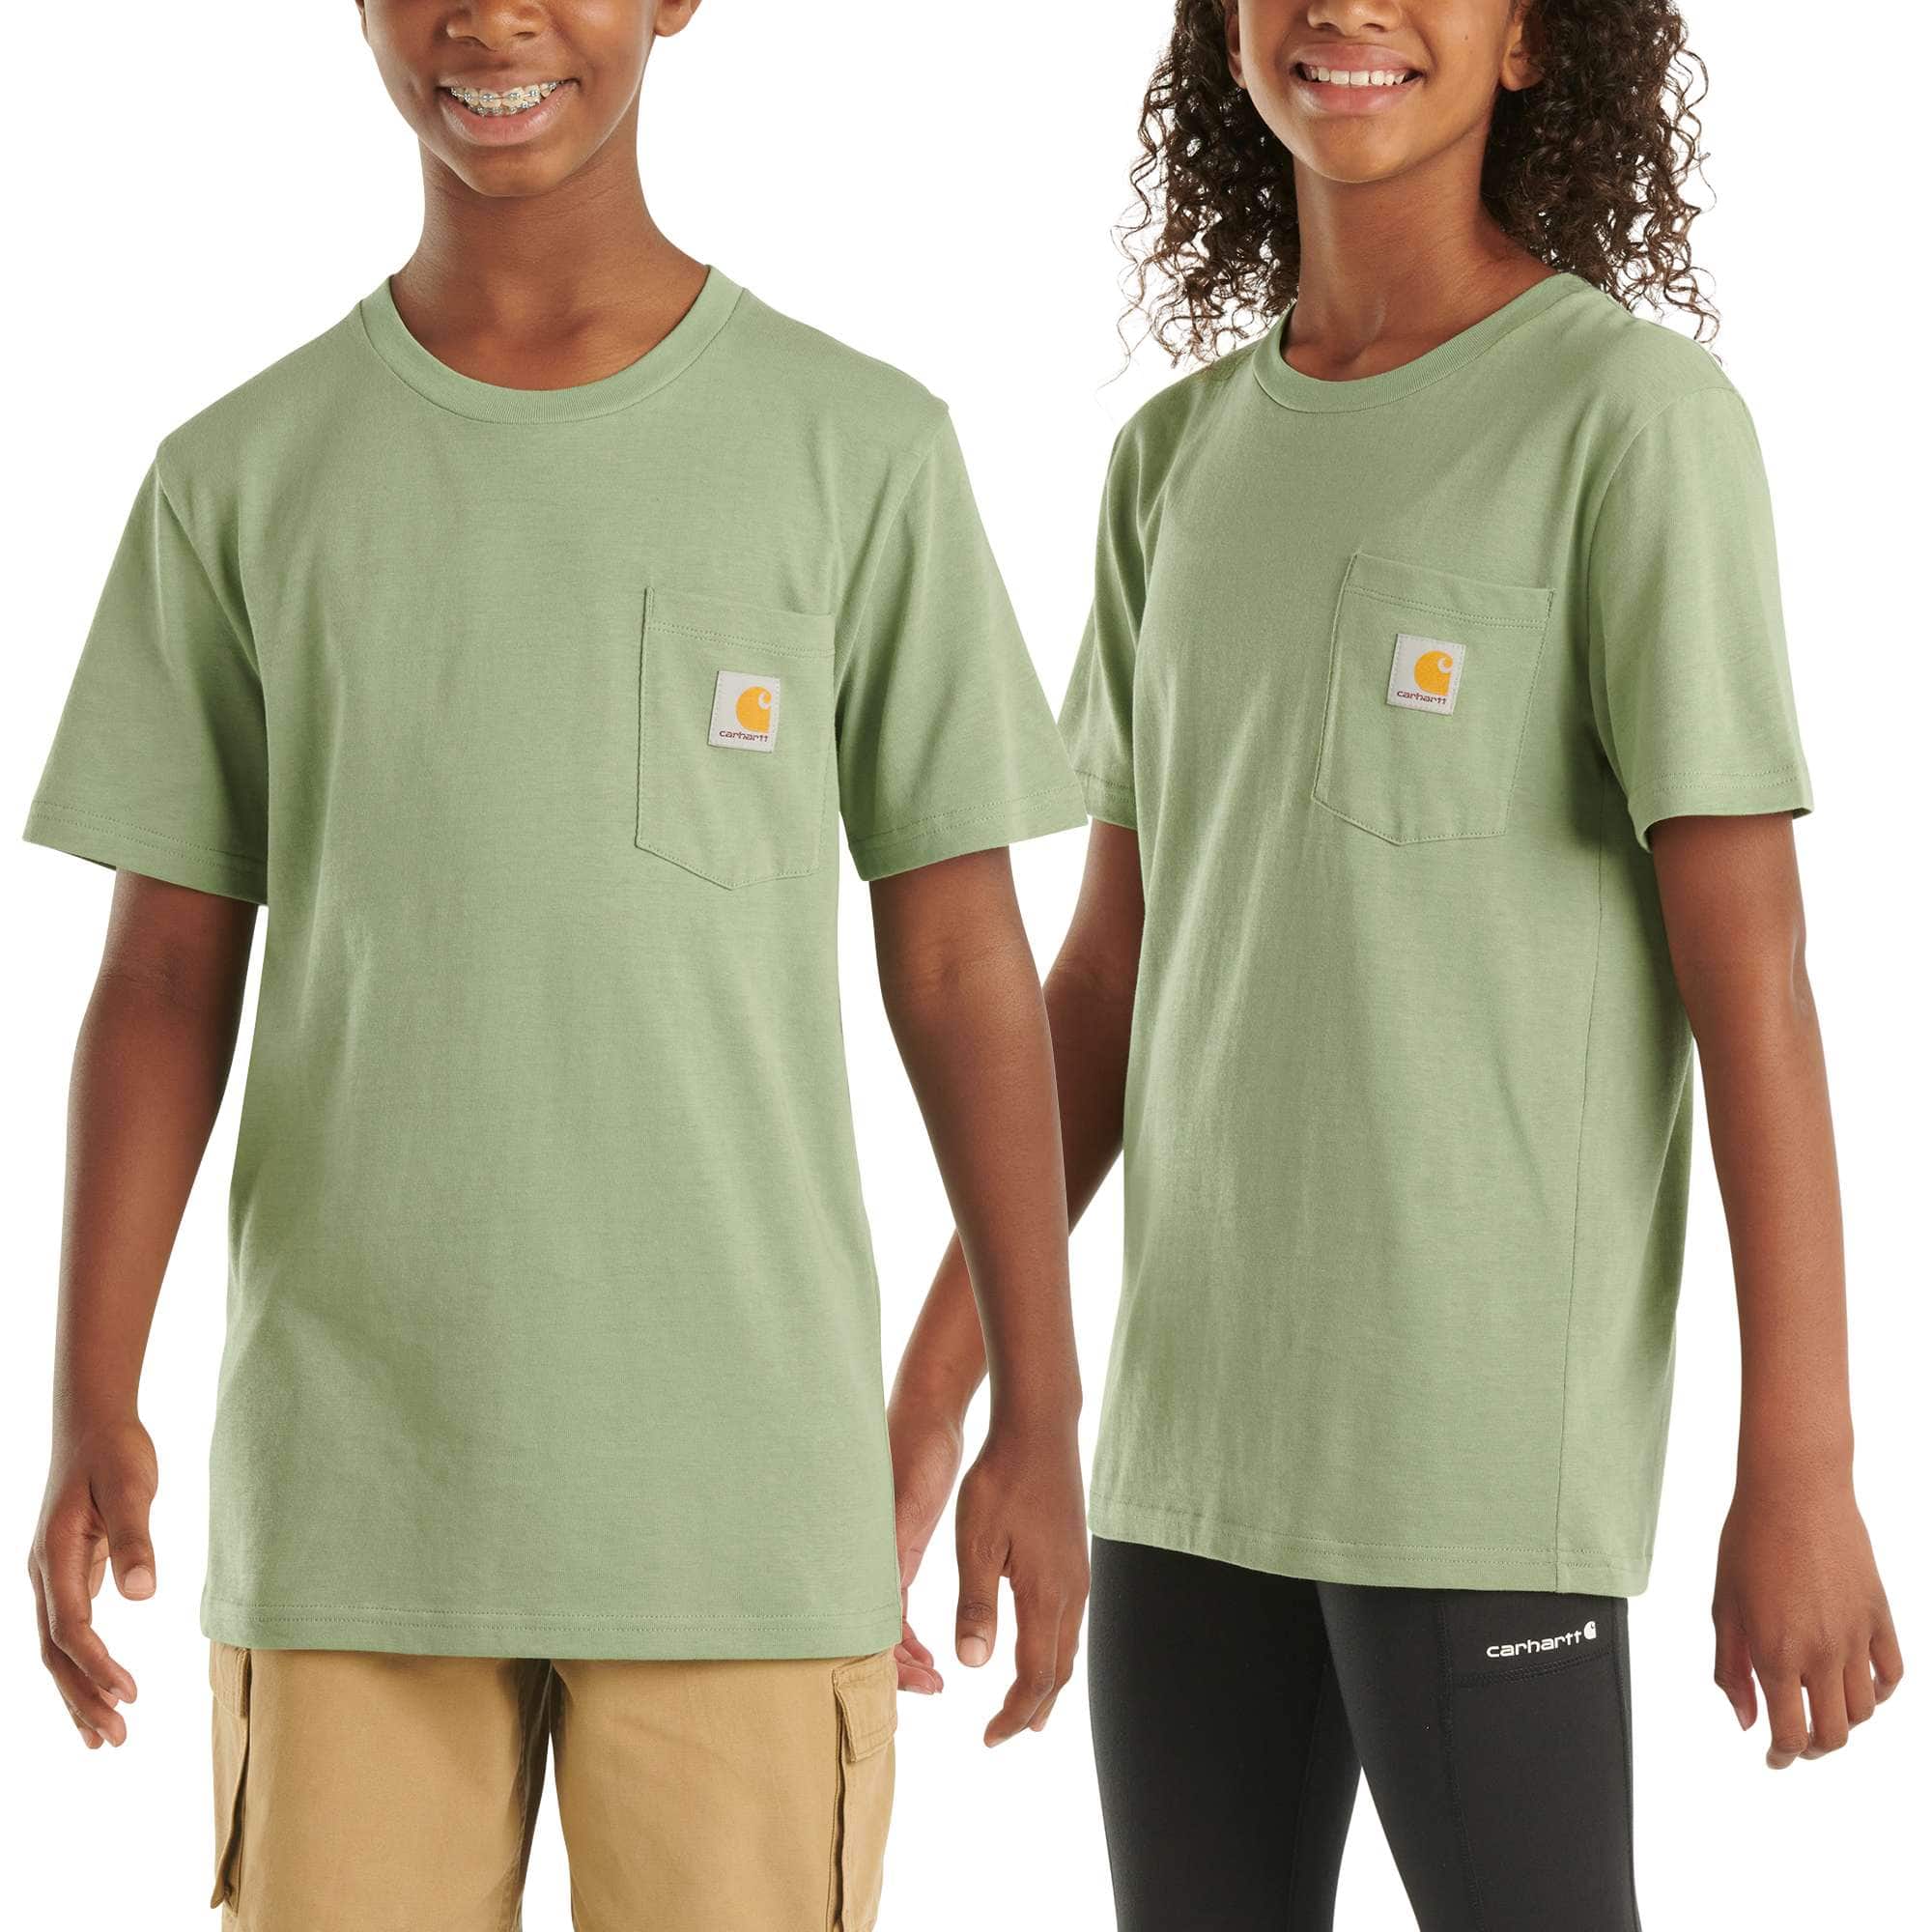 Toddler Fishing Shirts Size: 5, Color: White, Toddler unisex